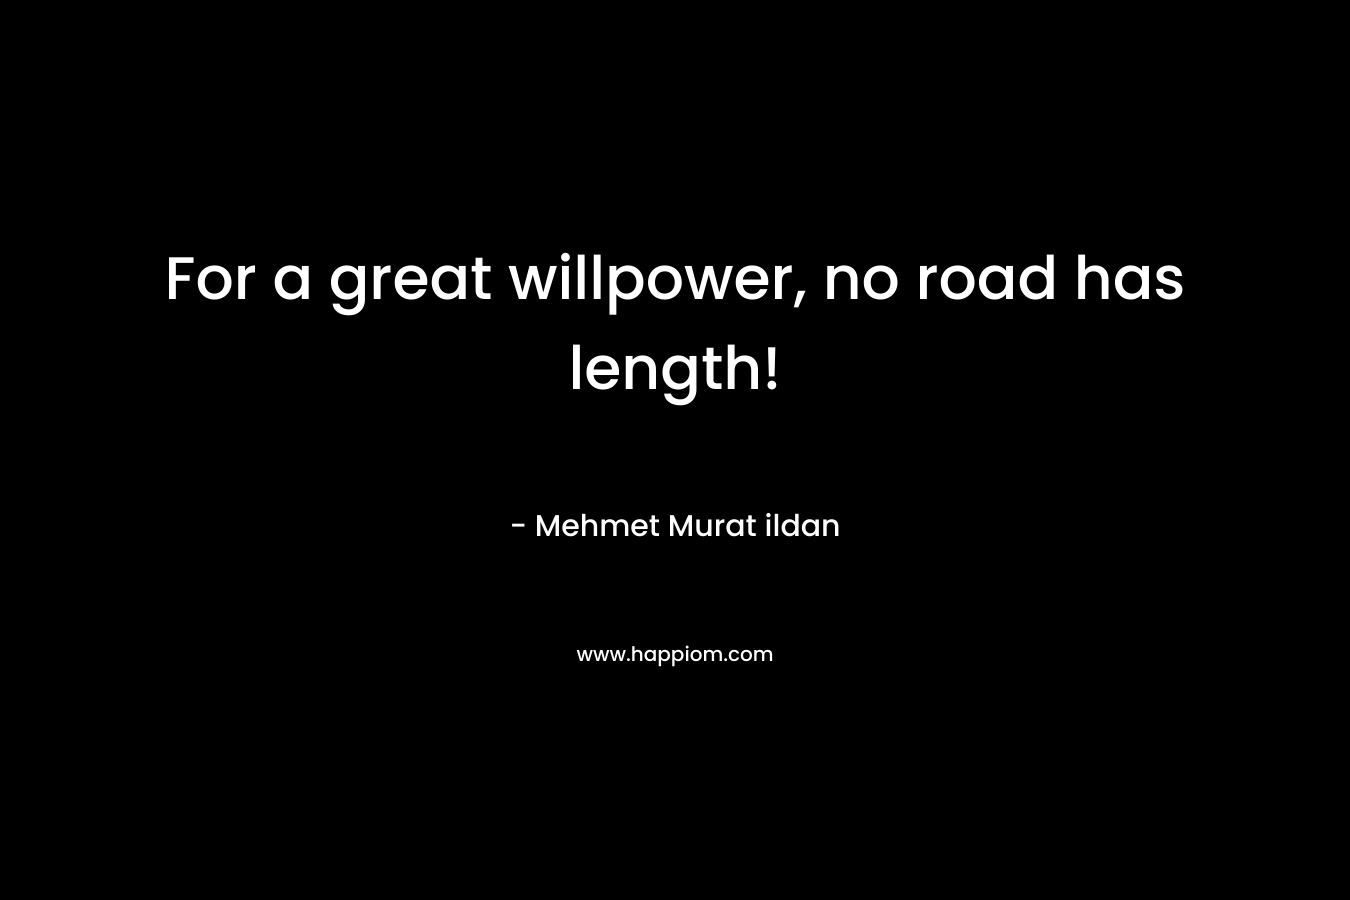 For a great willpower, no road has length! – Mehmet Murat ildan